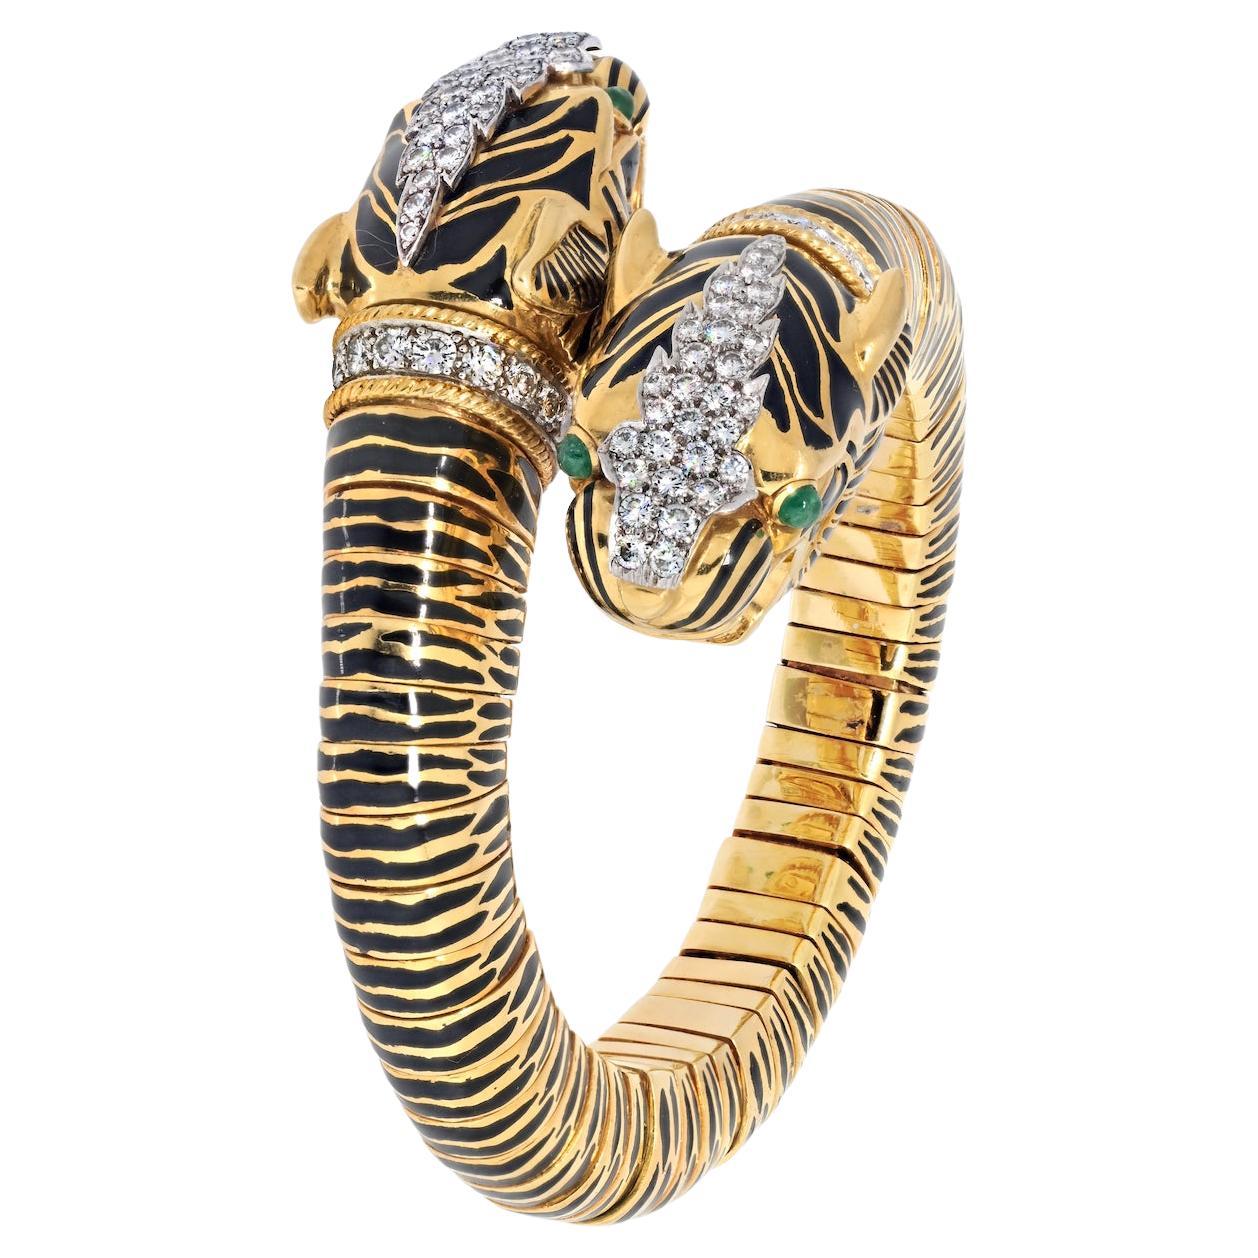 David Webb 18K Yellow Gold, Platinum Double Tiger Black Enamel Animal Bracelet